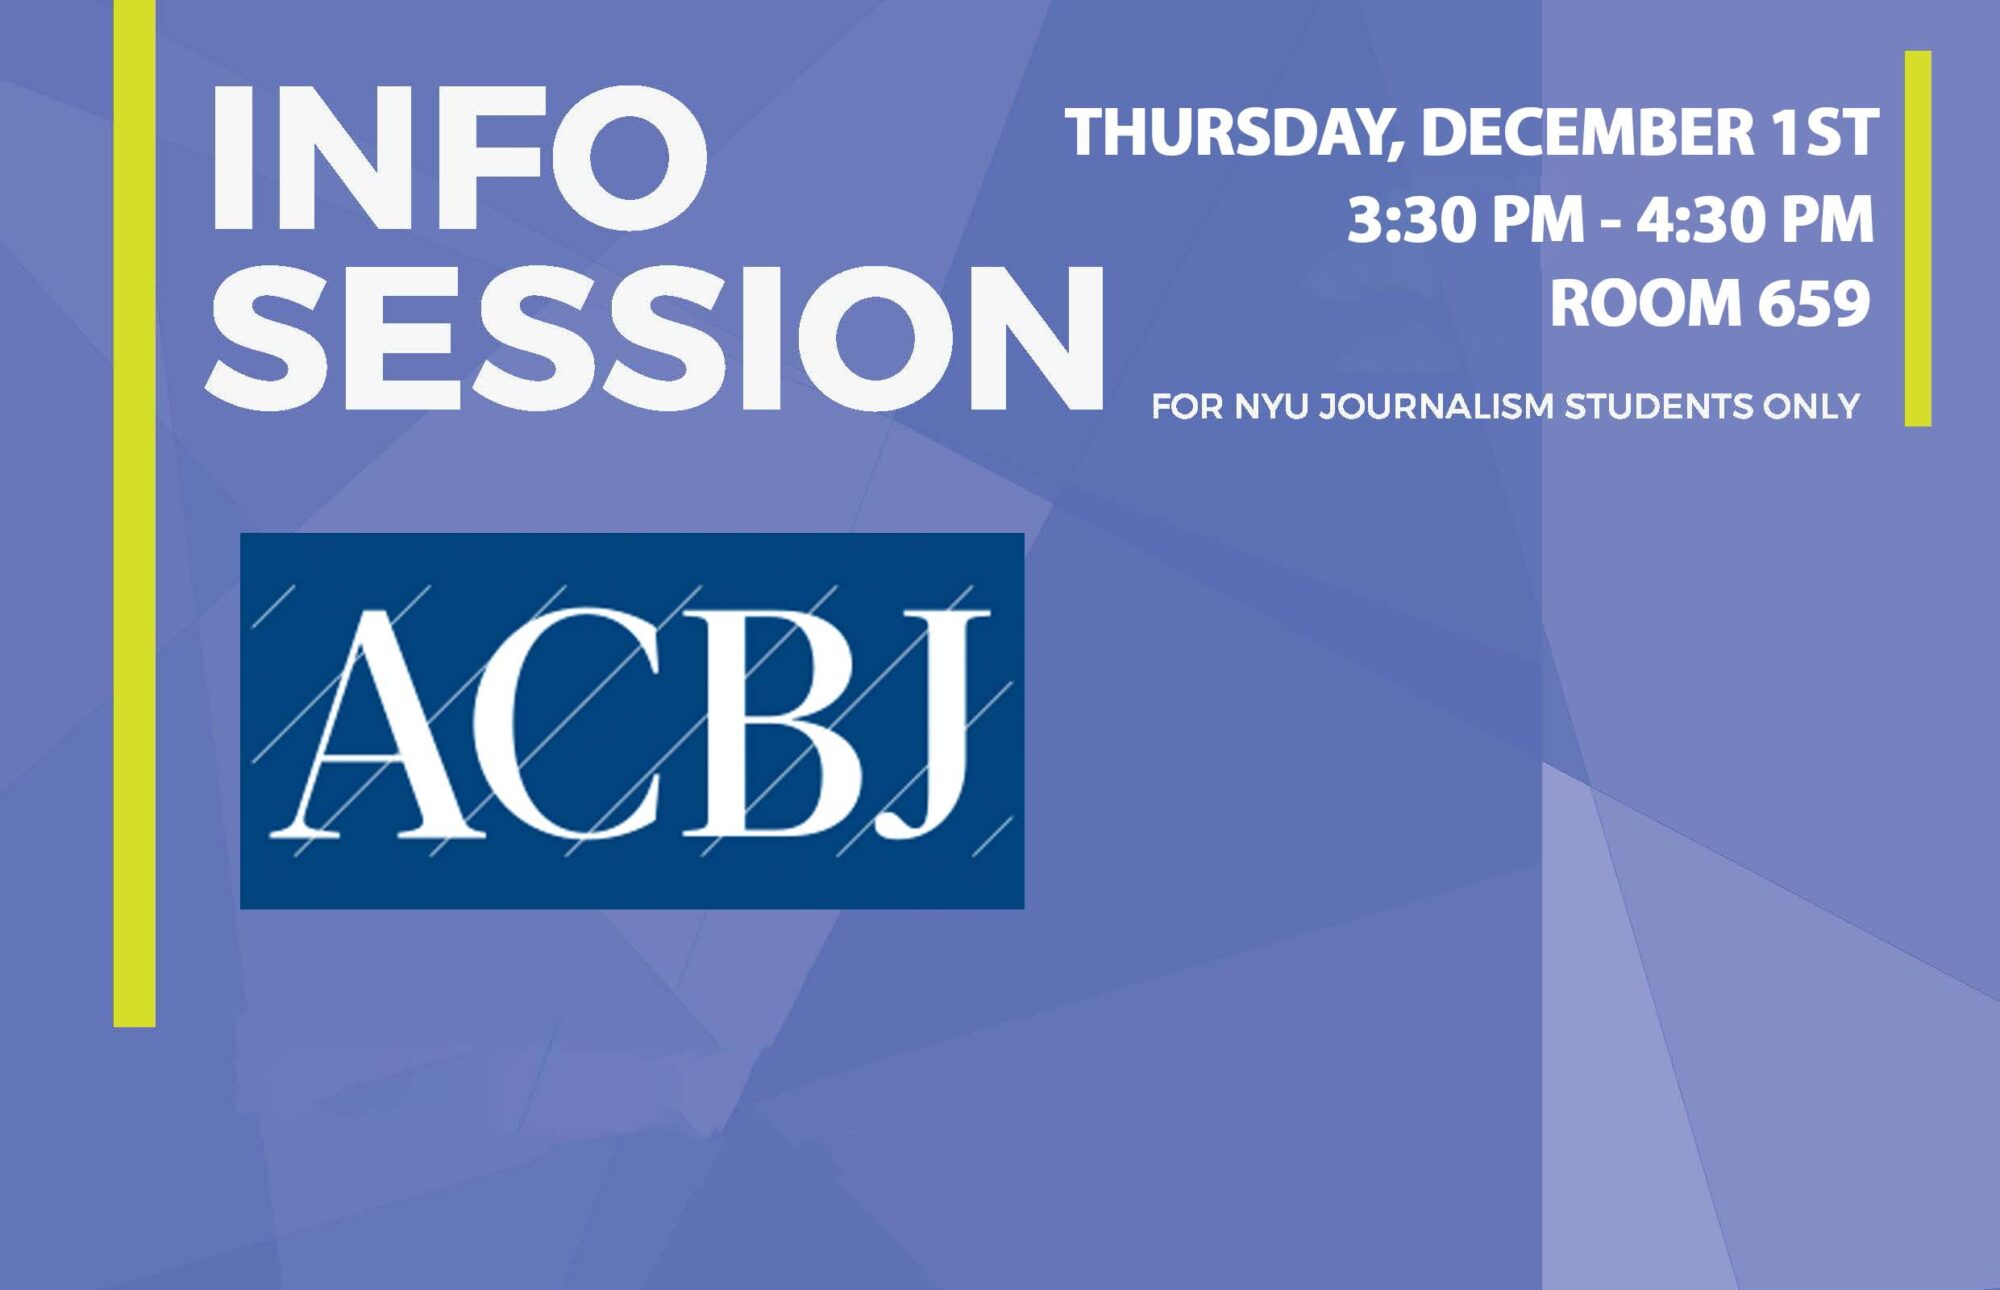 ACBJ Info Session